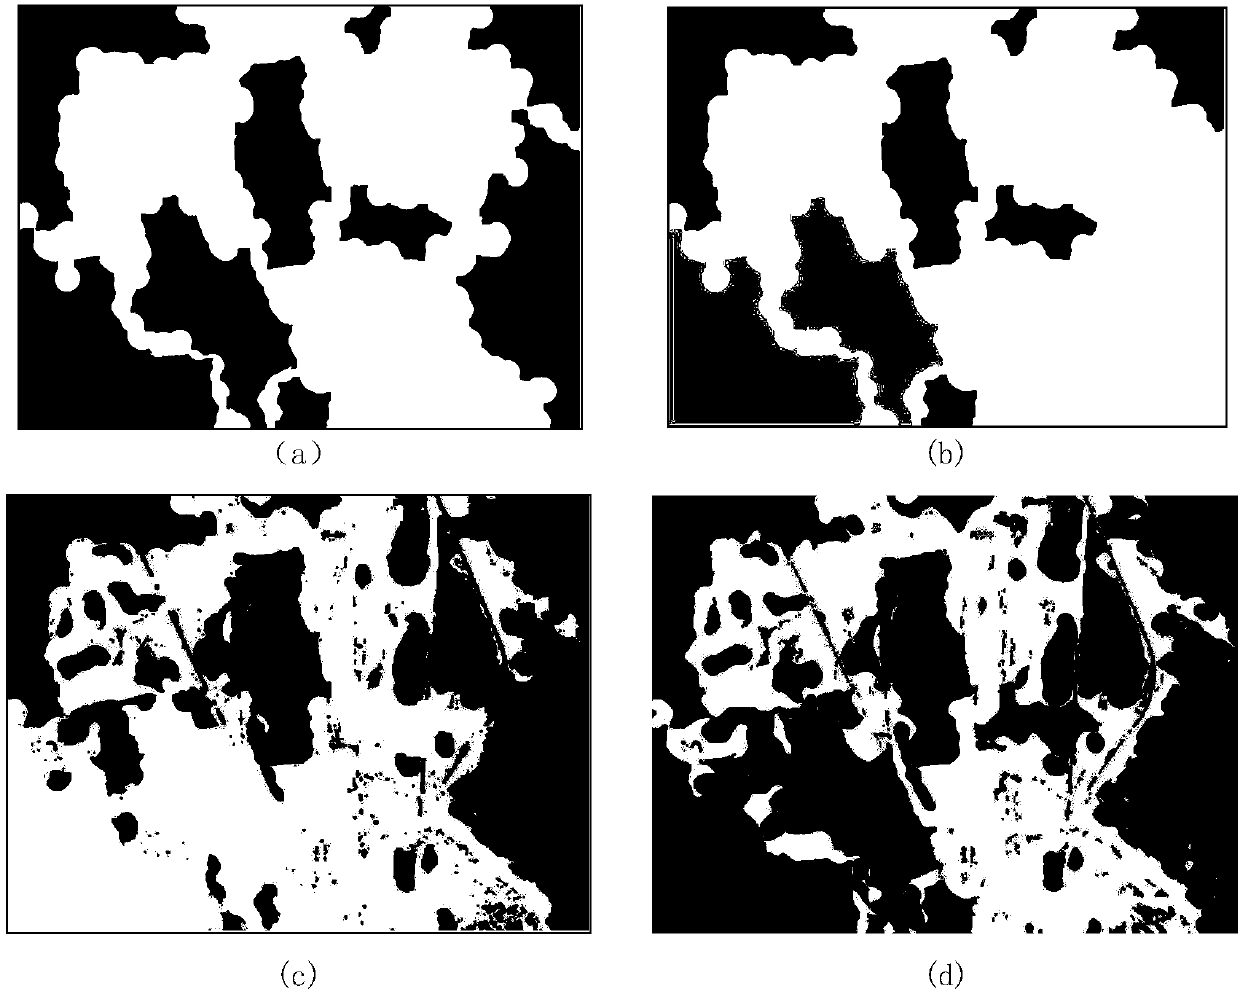 Two-stage clustering-based SAR image semantic segmentation method